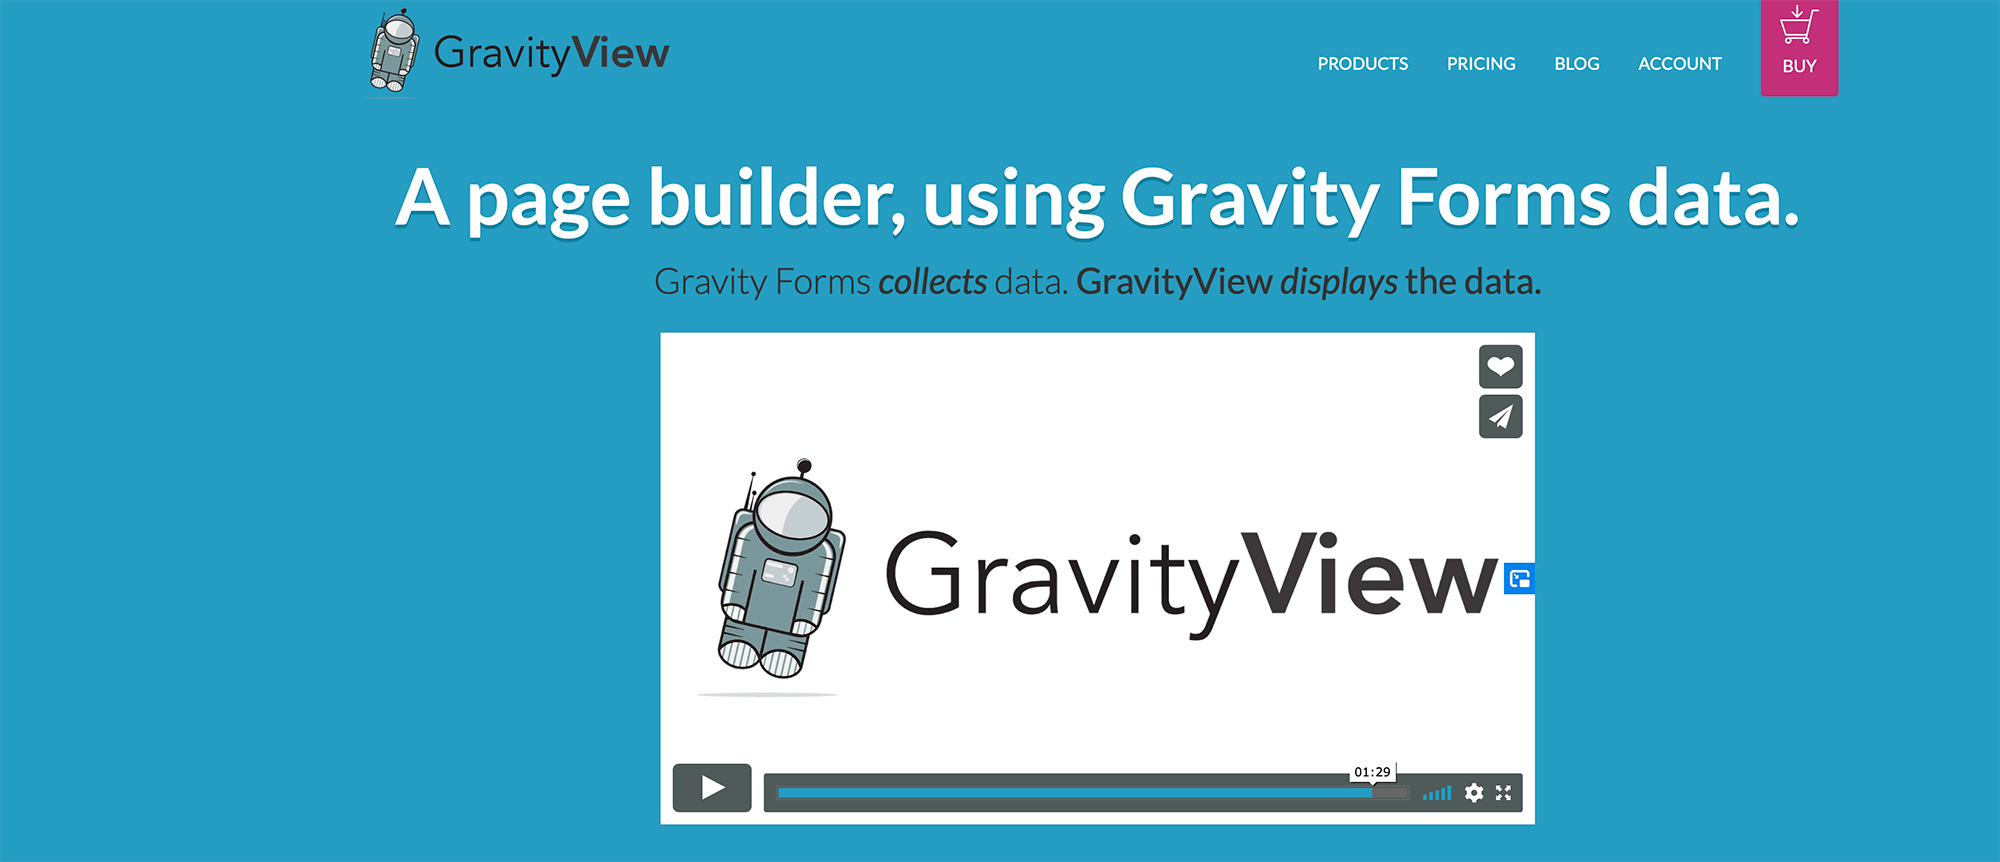 GravityView Plugin Review